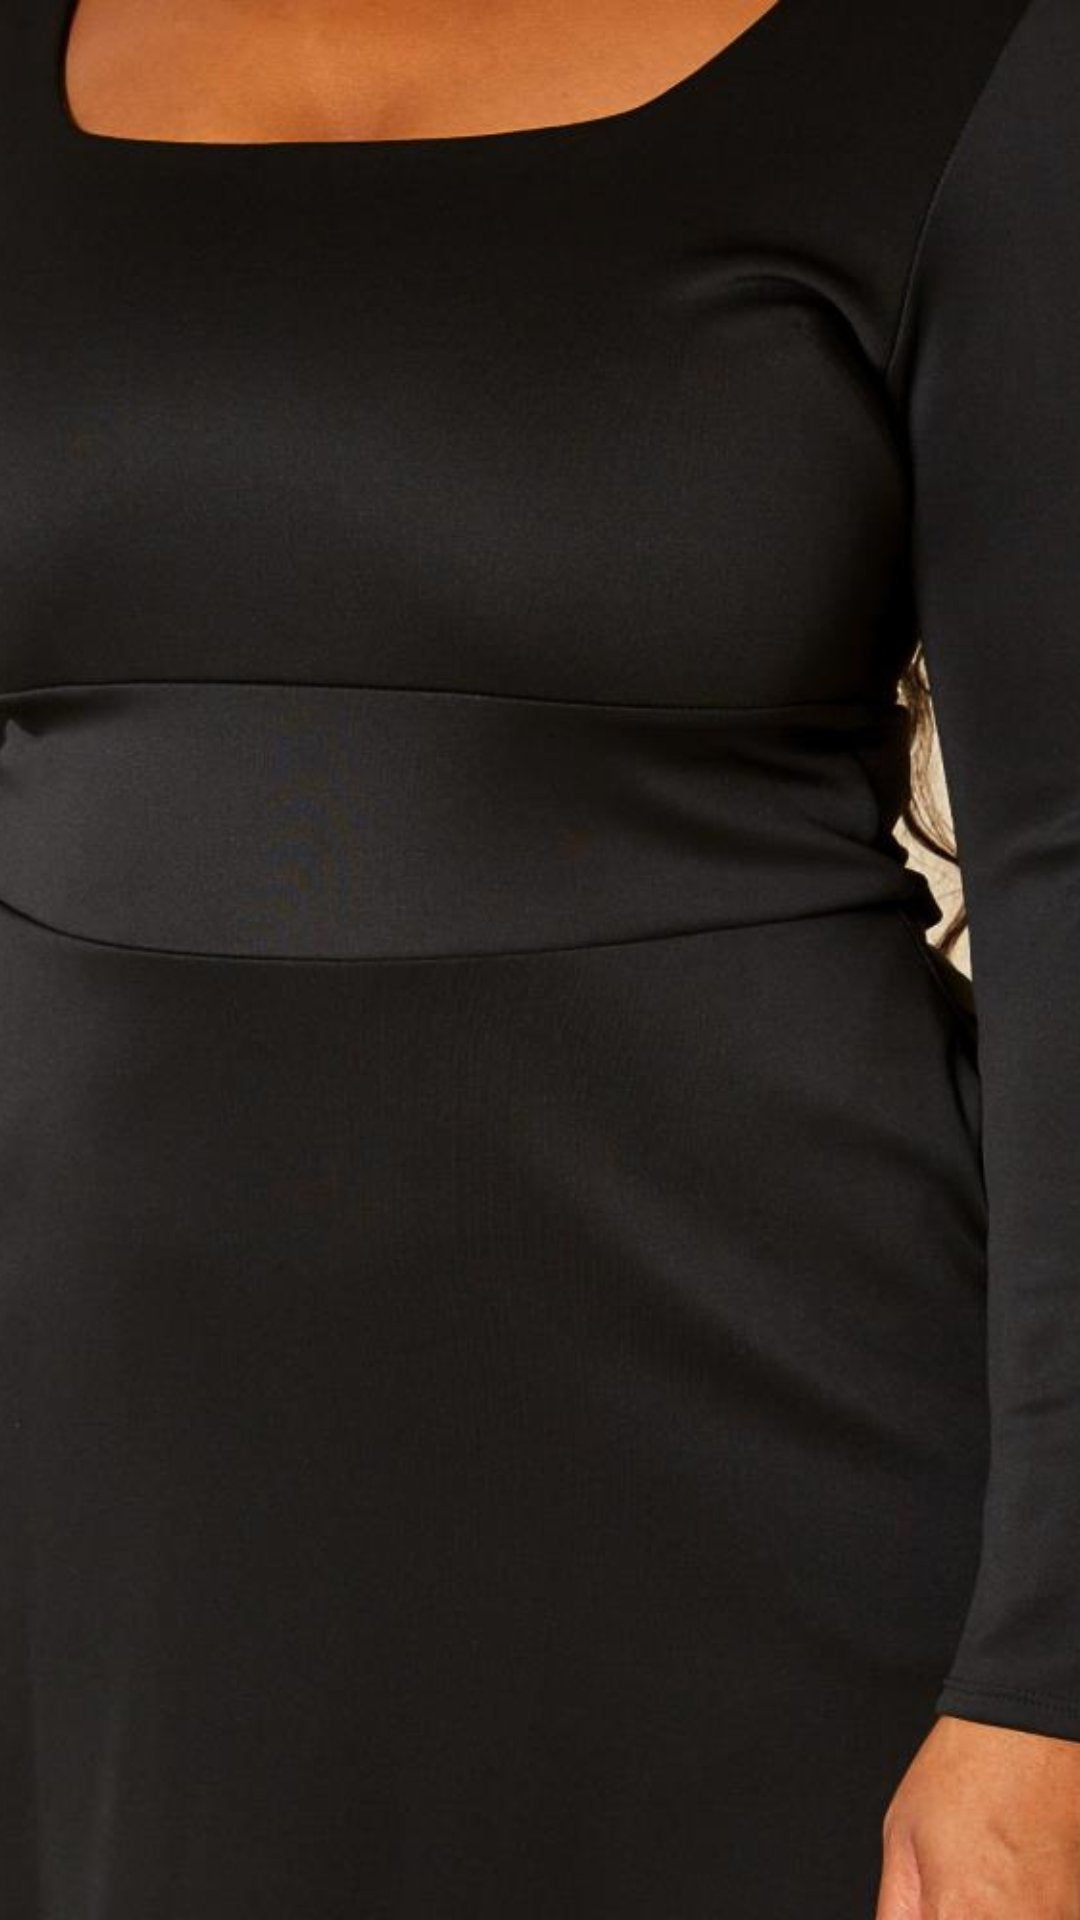 Plus Size Square Neckline Black Maxi Dress